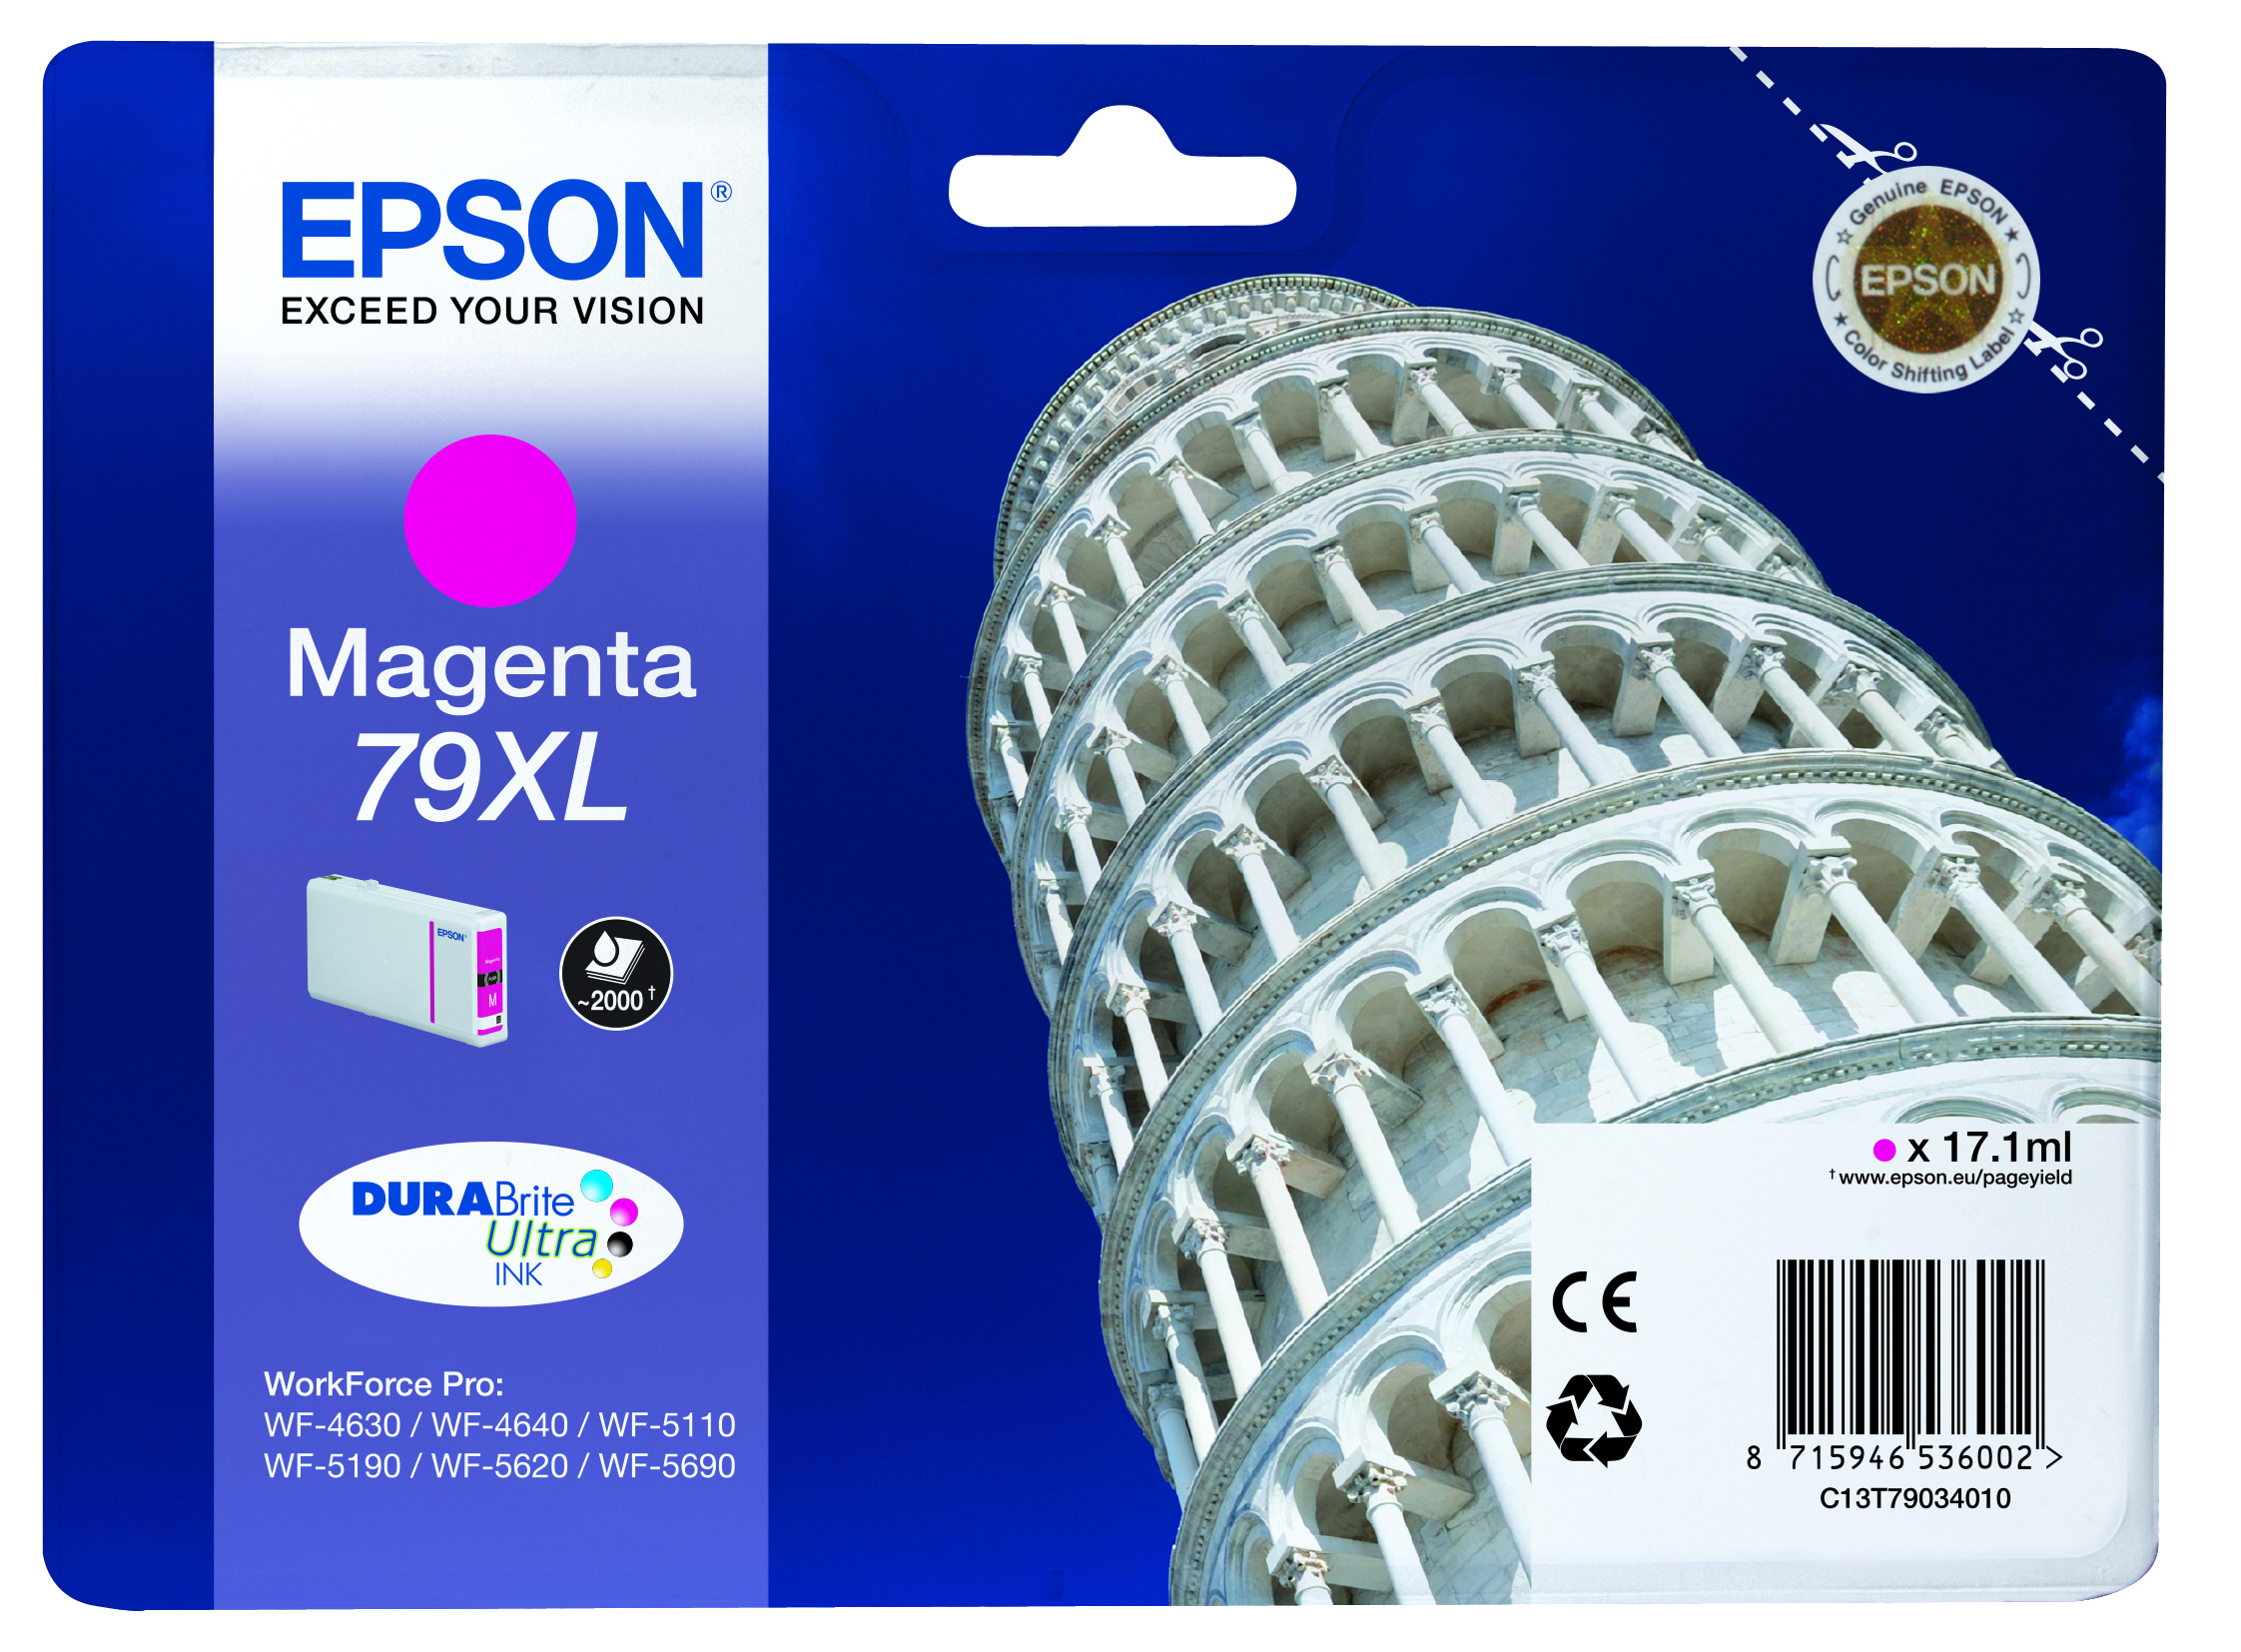 Epson Tower of Pisa Singlepack Magenta 79XL DURABrite Ultra Ink single pack / magenta